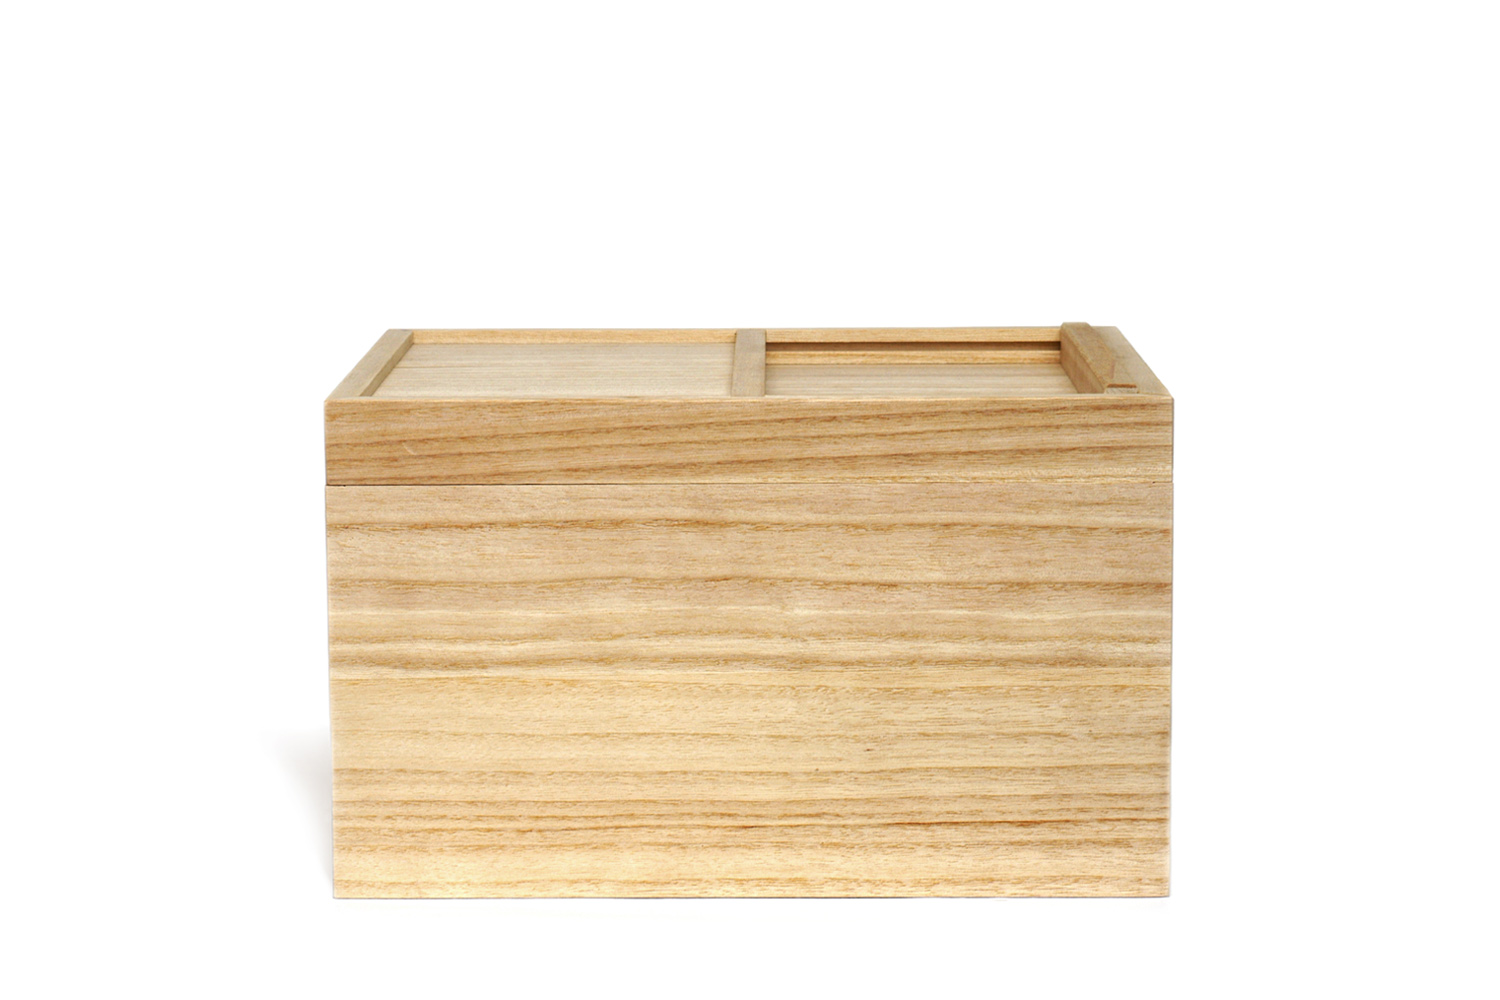 Azmaya - Rice Storage Box from Japan